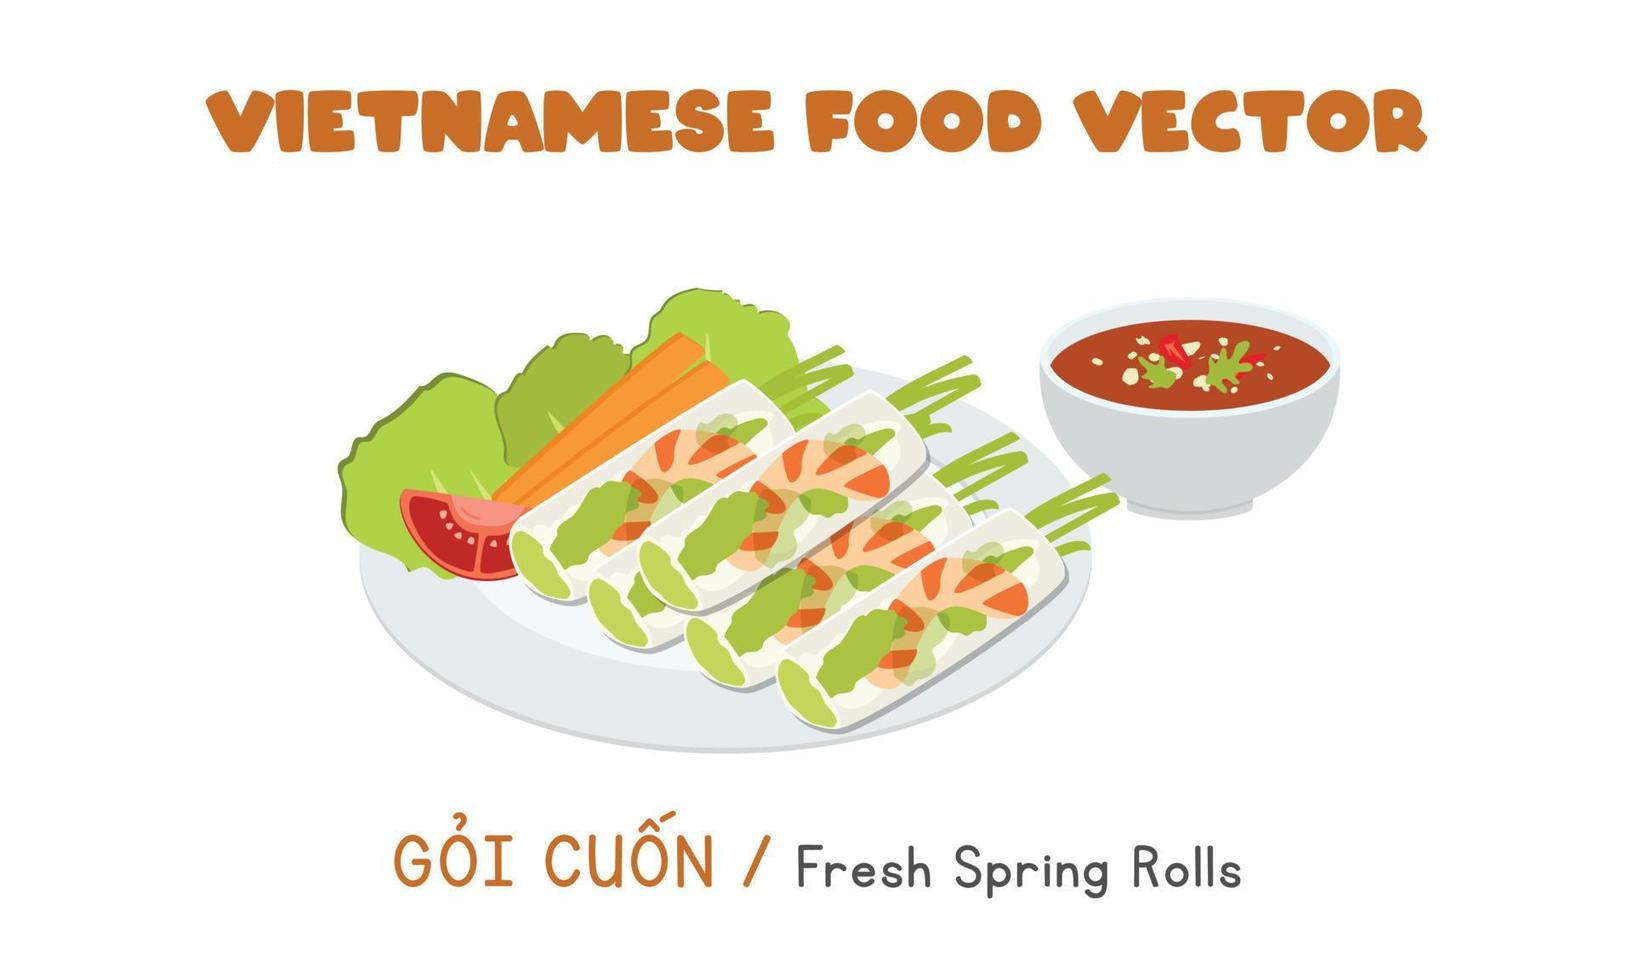 rollitos de primavera frescos vietnamitas con gambas, cerdo, verduras, diseño vectorial plano. goi cuon clipart estilo de dibujos animados. comida asiática. cocina vietnamita vector